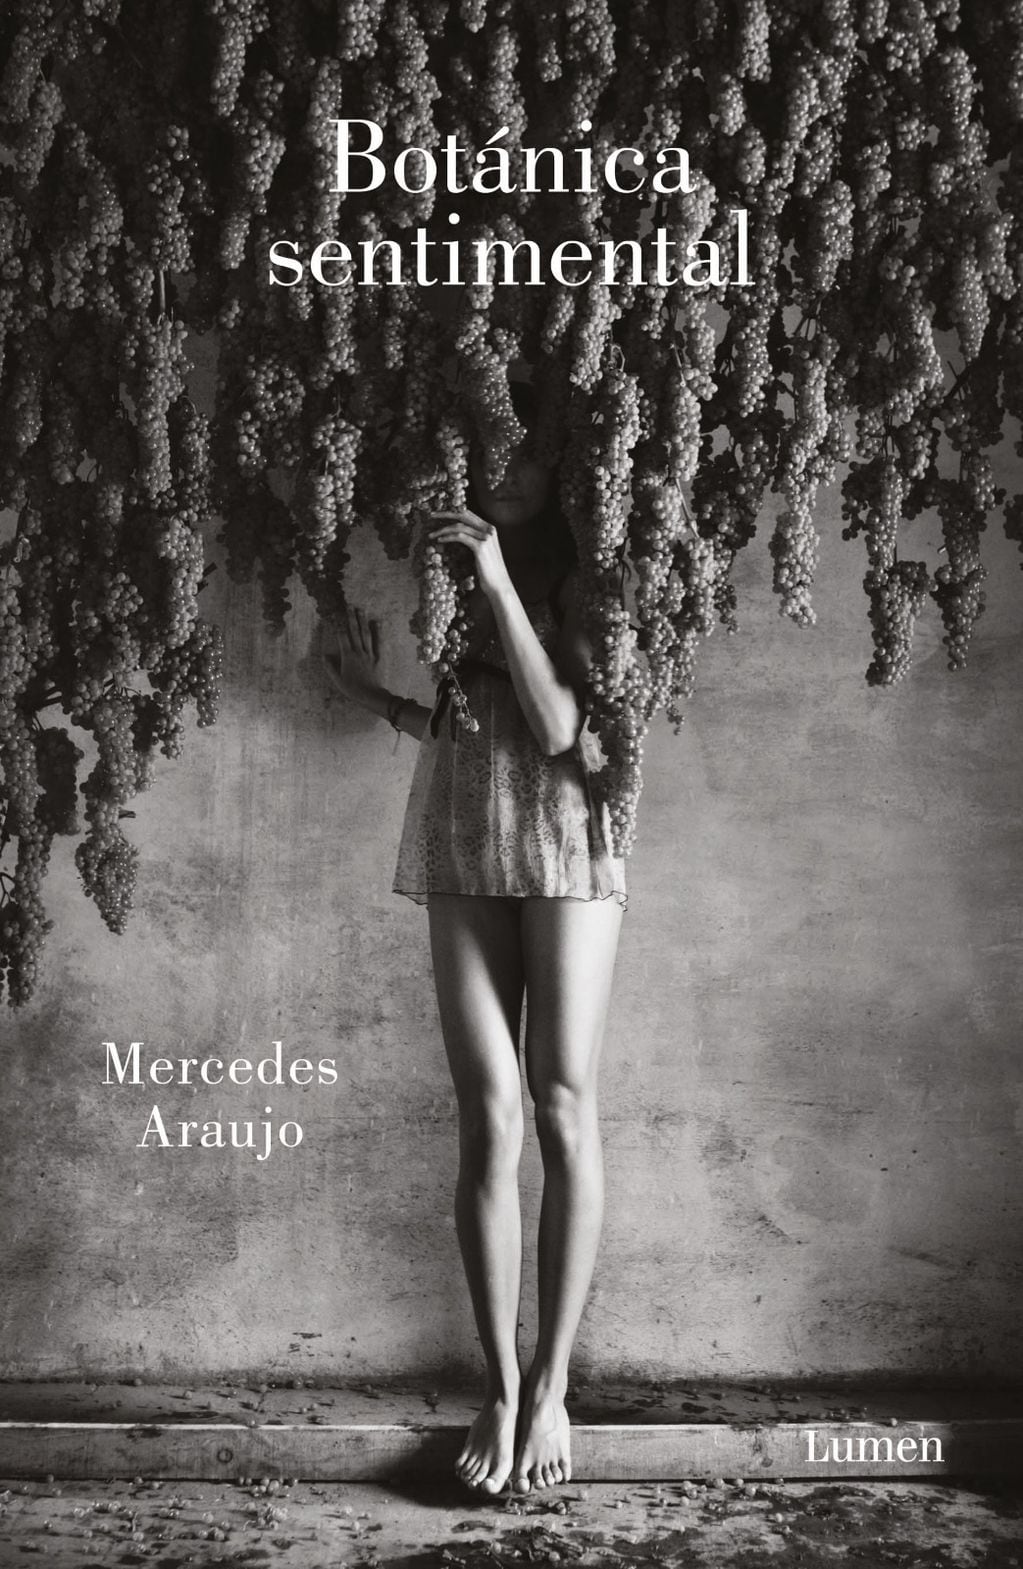 Novela de Mercedes Araujo.